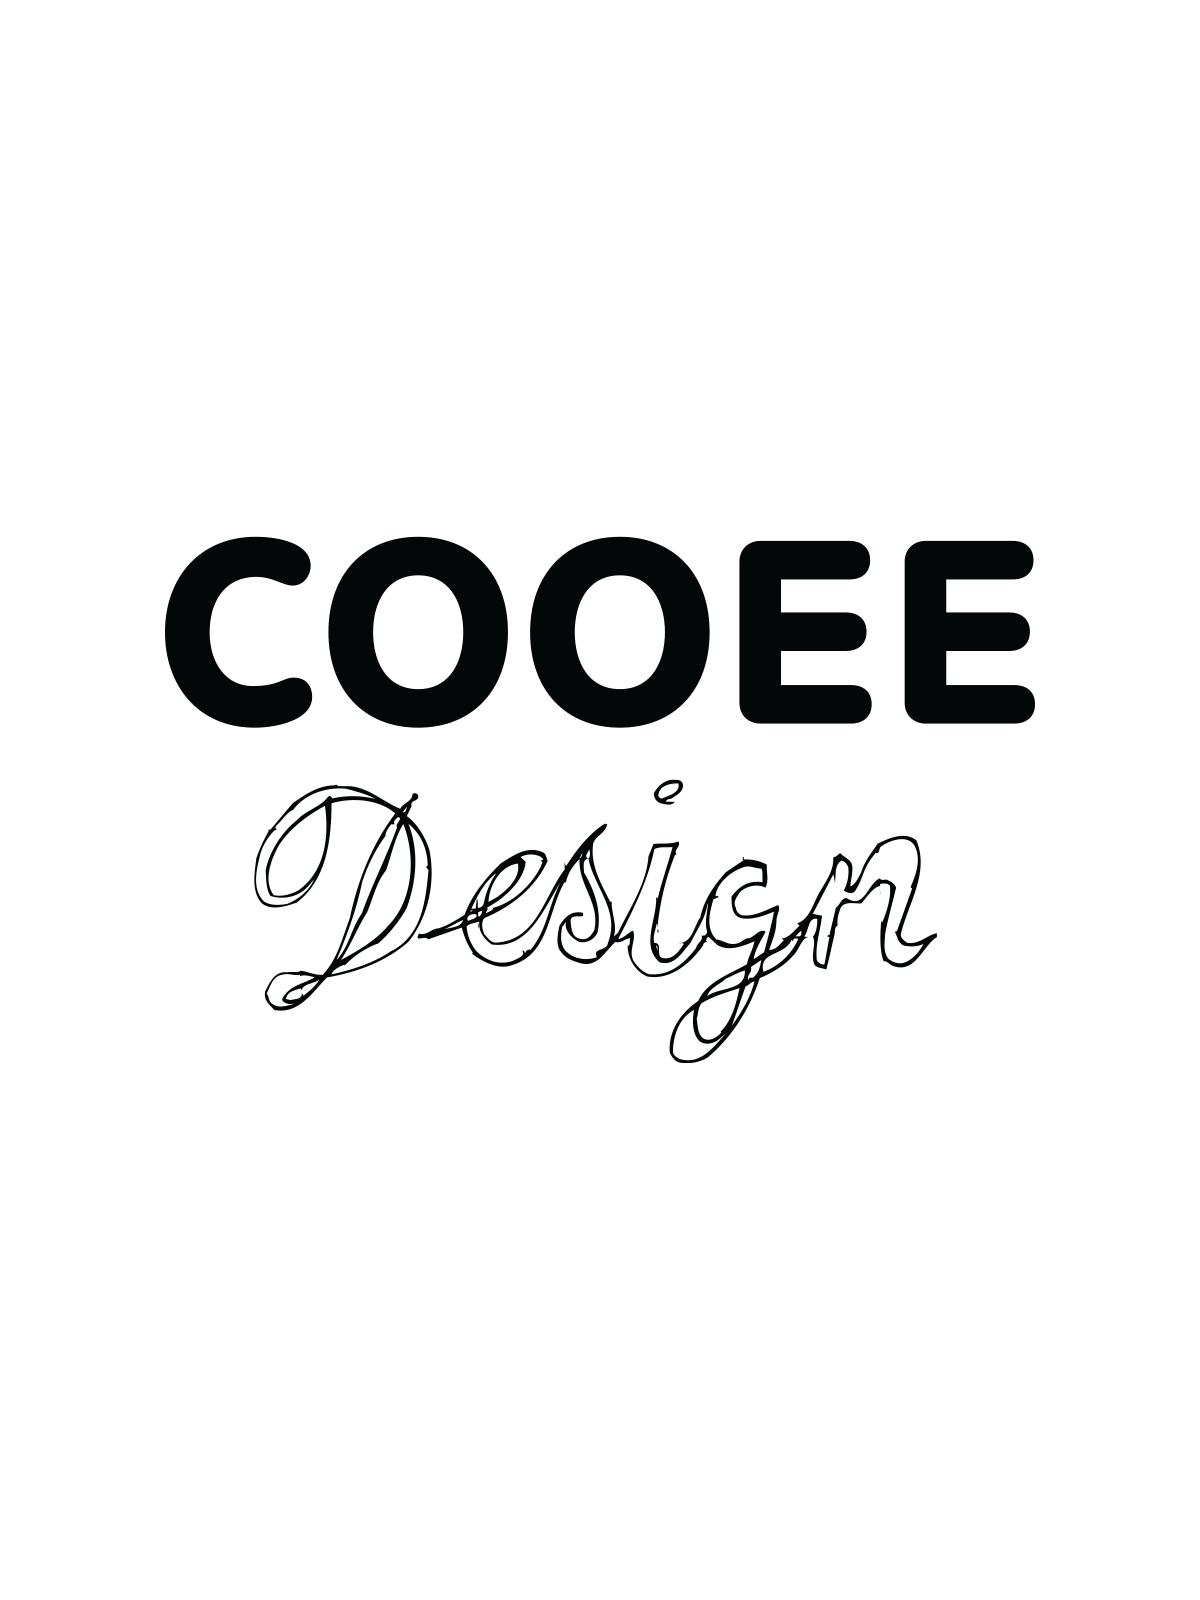 cooee design